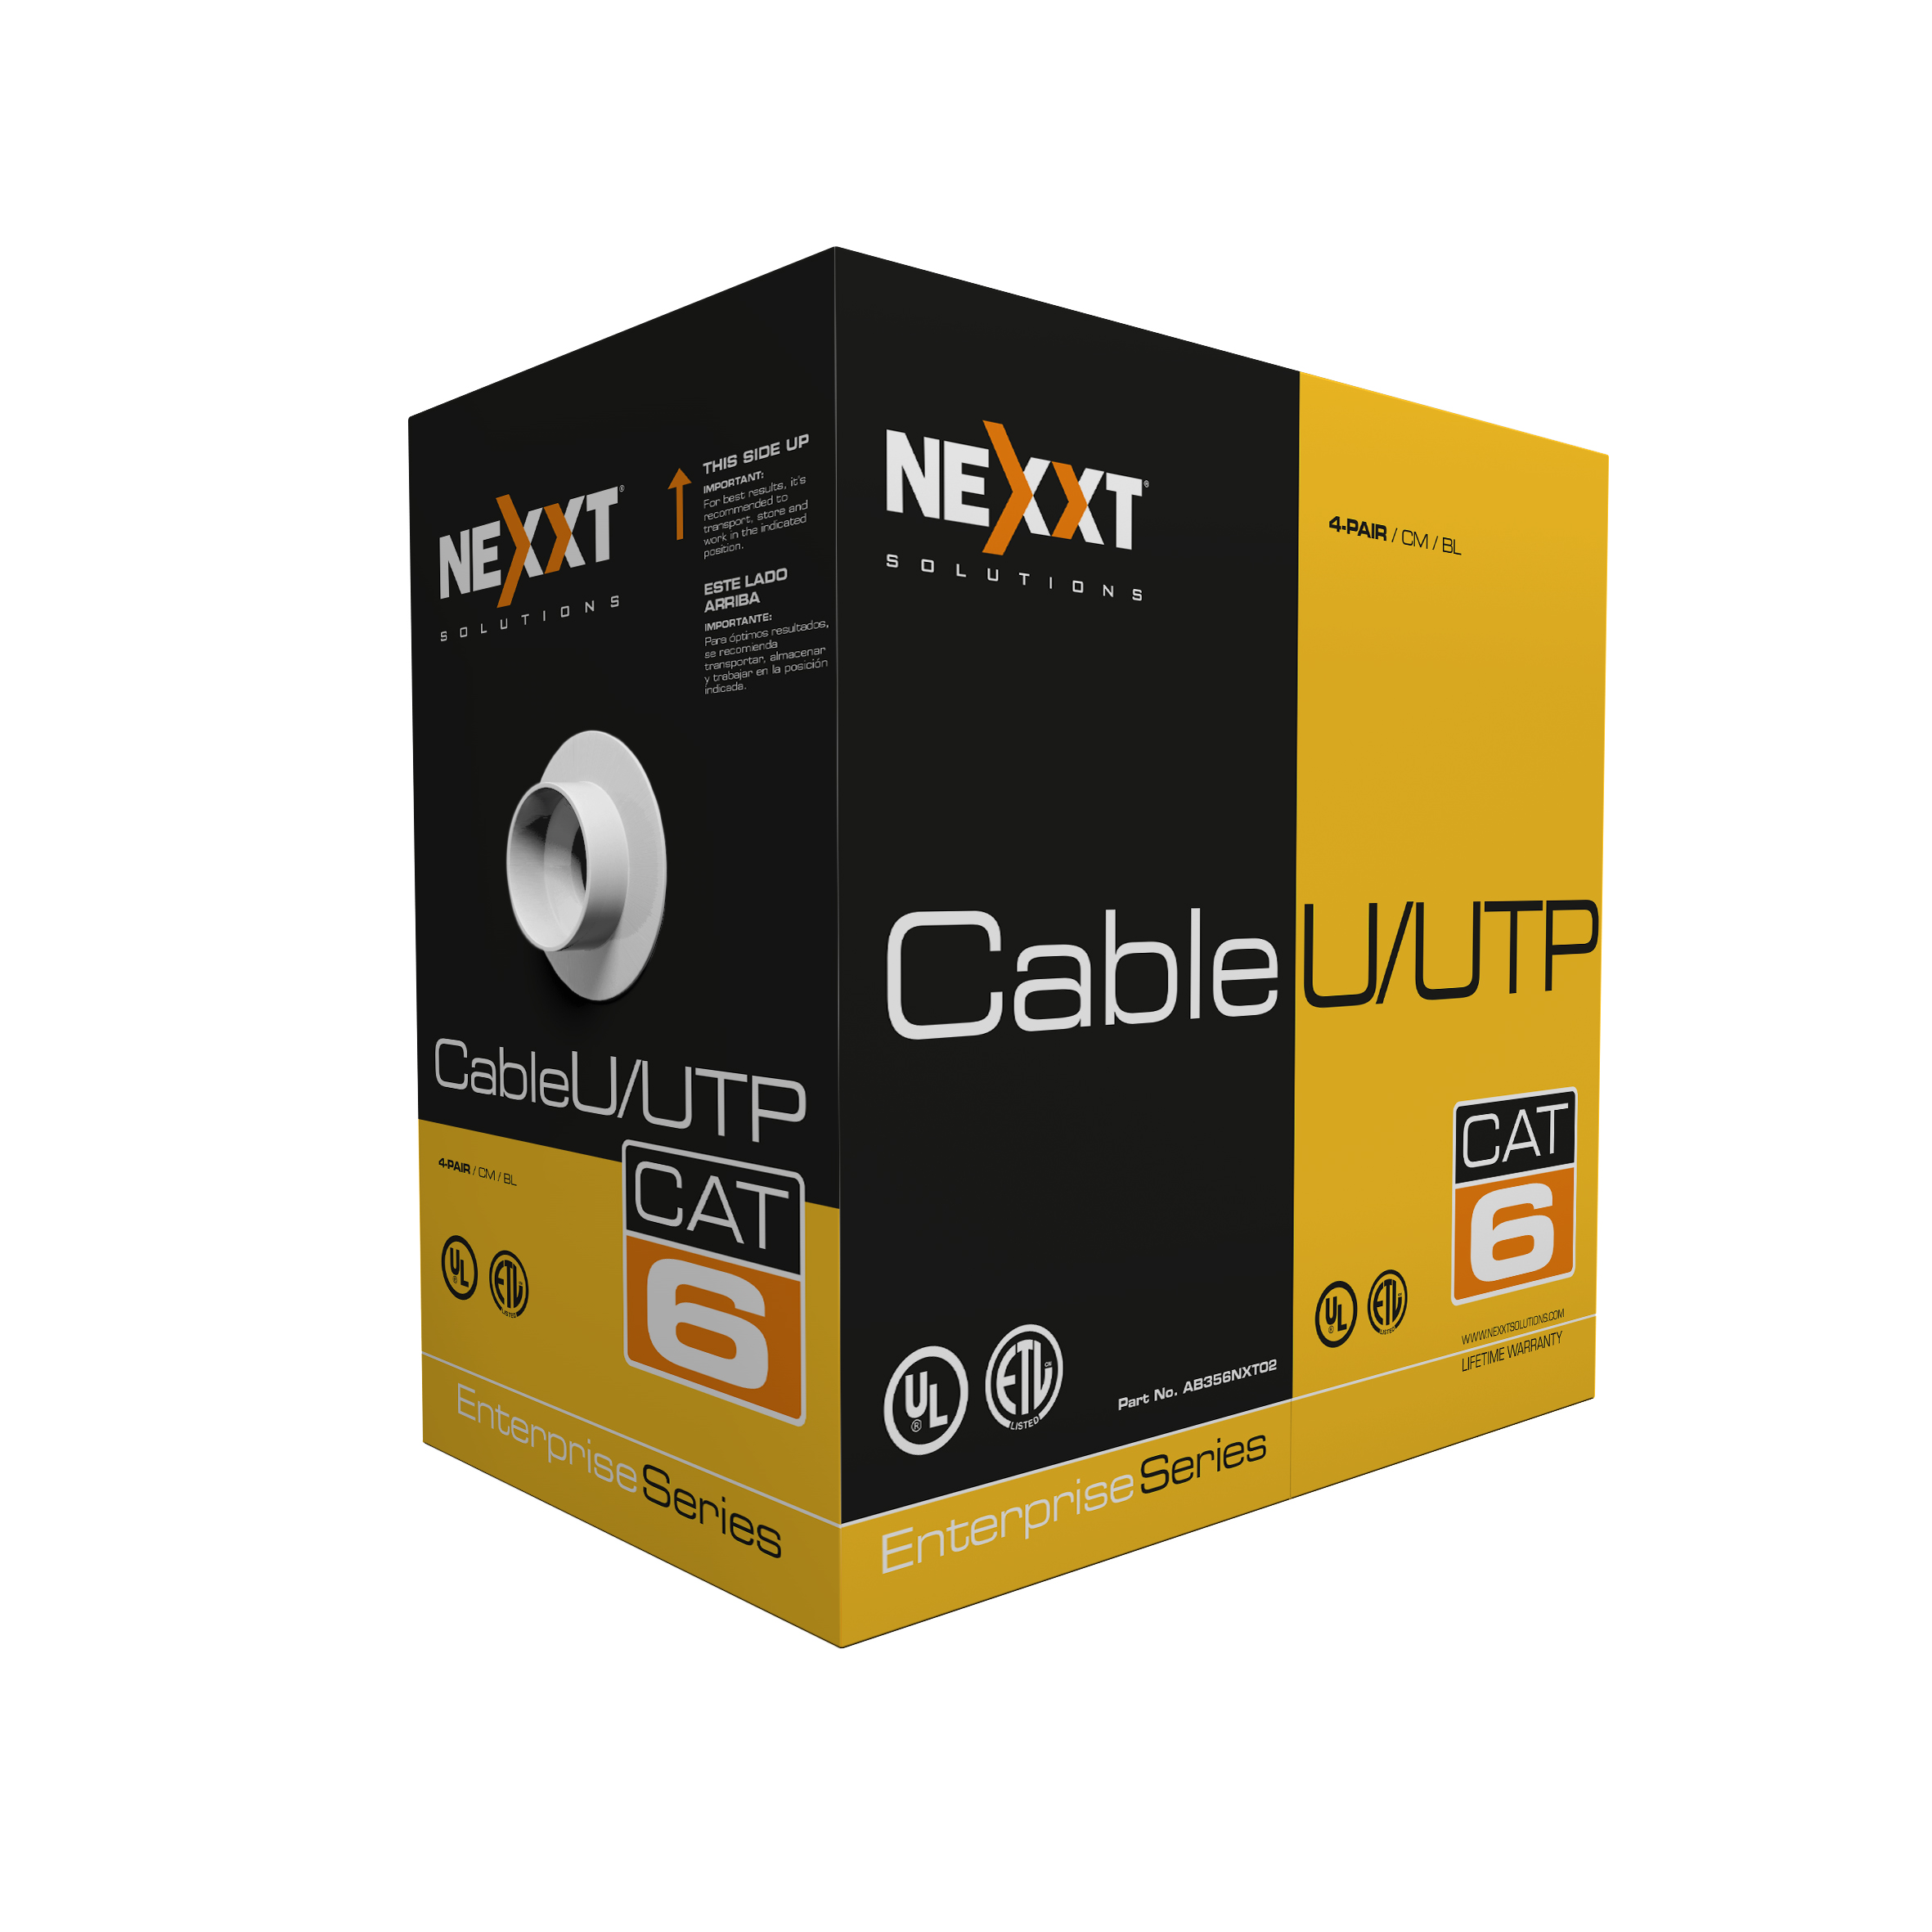 Cable de Red Utp Cat 6 Nuevo Sellado Testeado Rj45 20 Metros - Promart